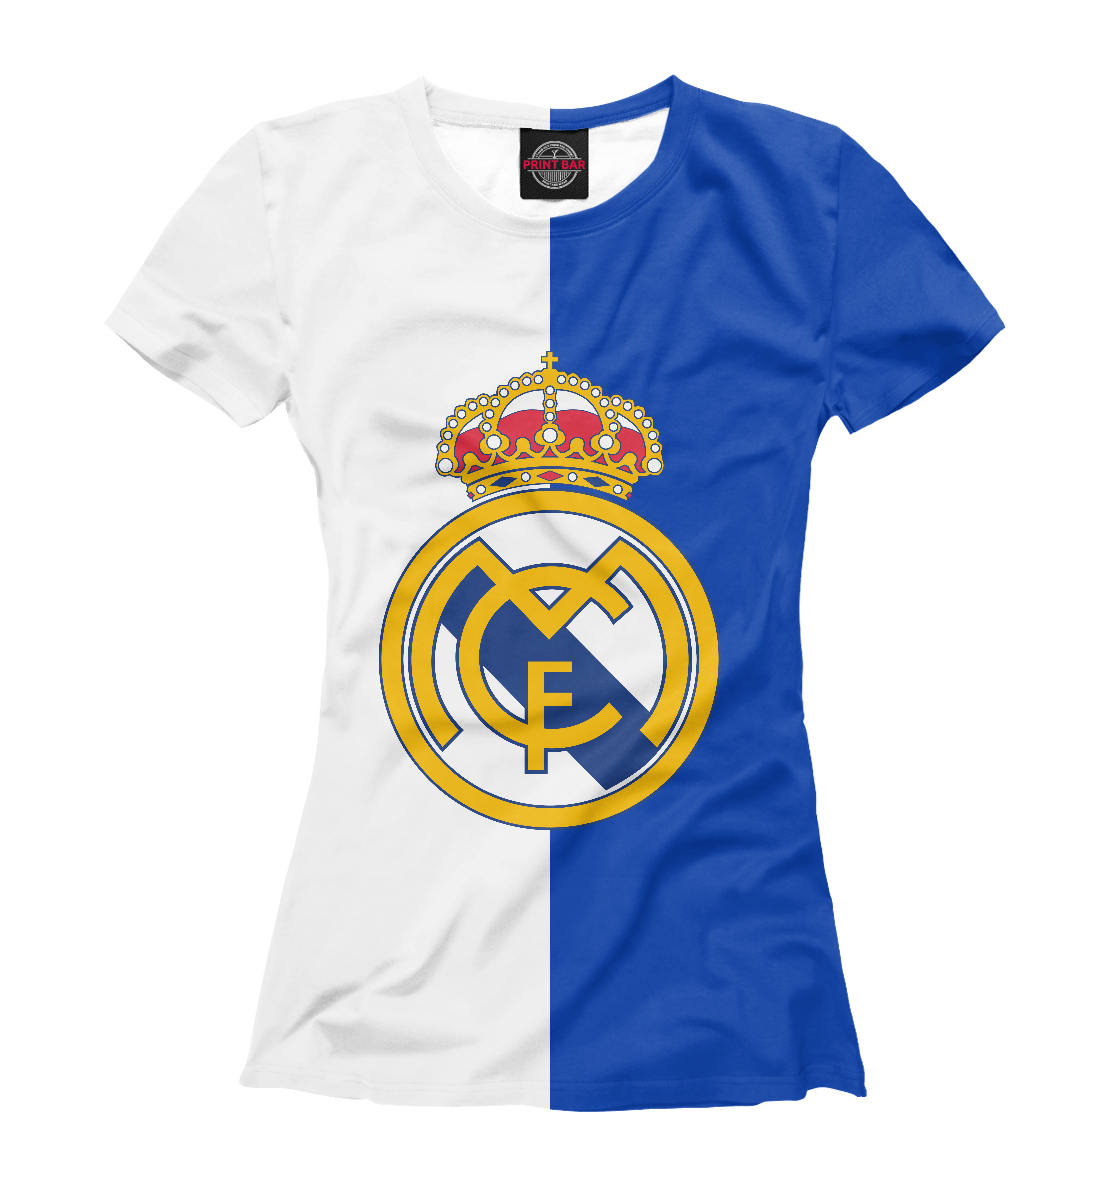 Real madrid купить футболку. Фанатские футболки Реал Мадрид. Футболка BMW real Madrid. Футболка Реал Мадрид для женщин. Футболка ФК Реал Мадрид (54).